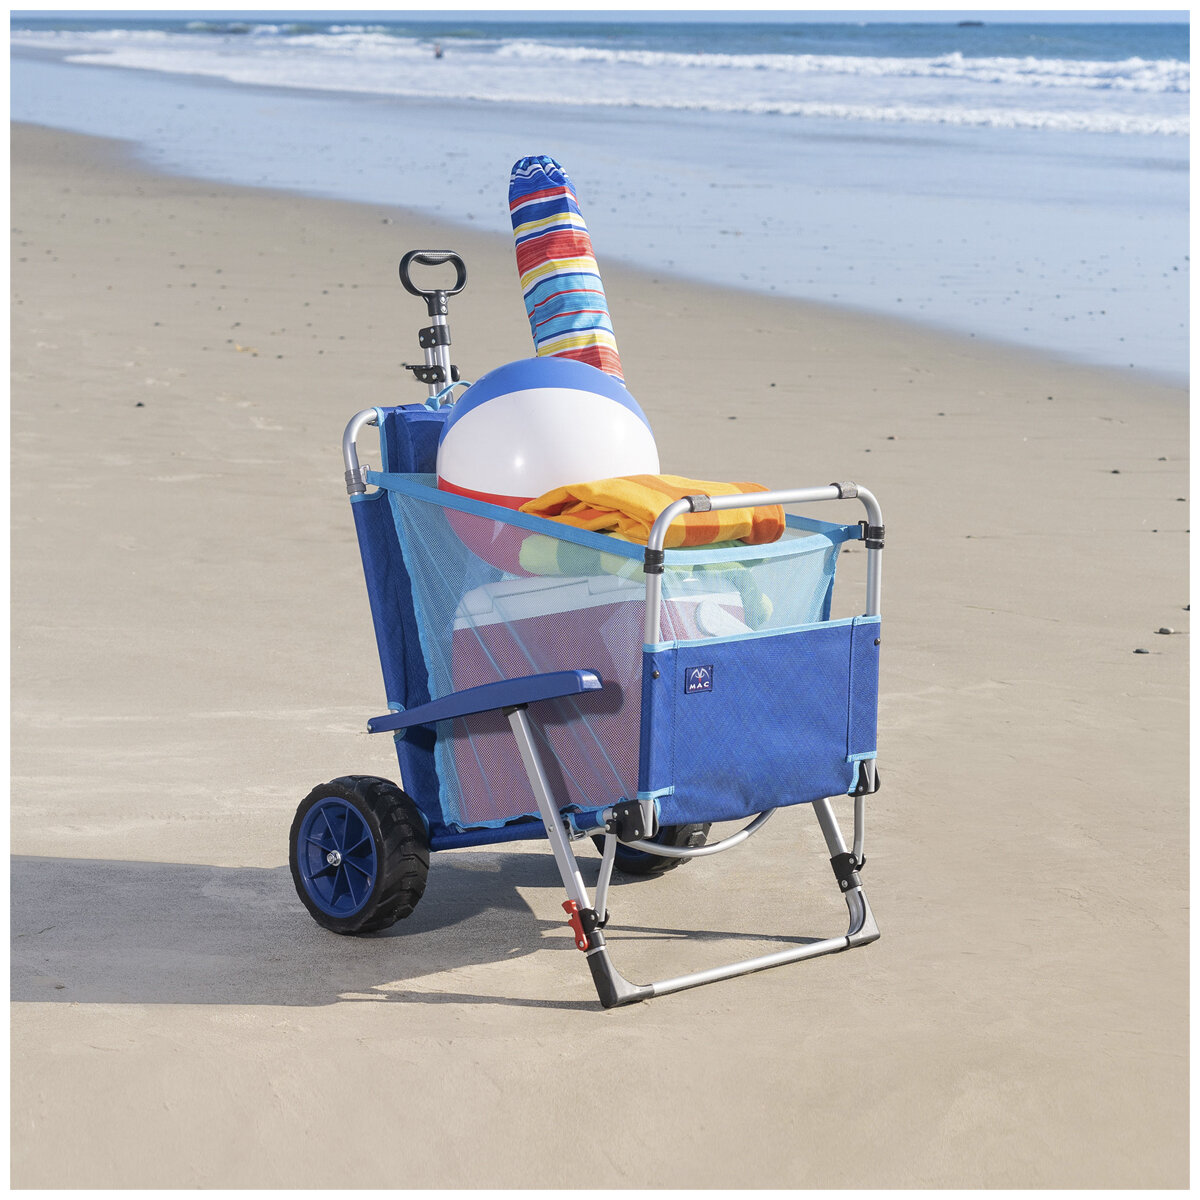 Mac Sports Beach Day Lounger Combo Cart